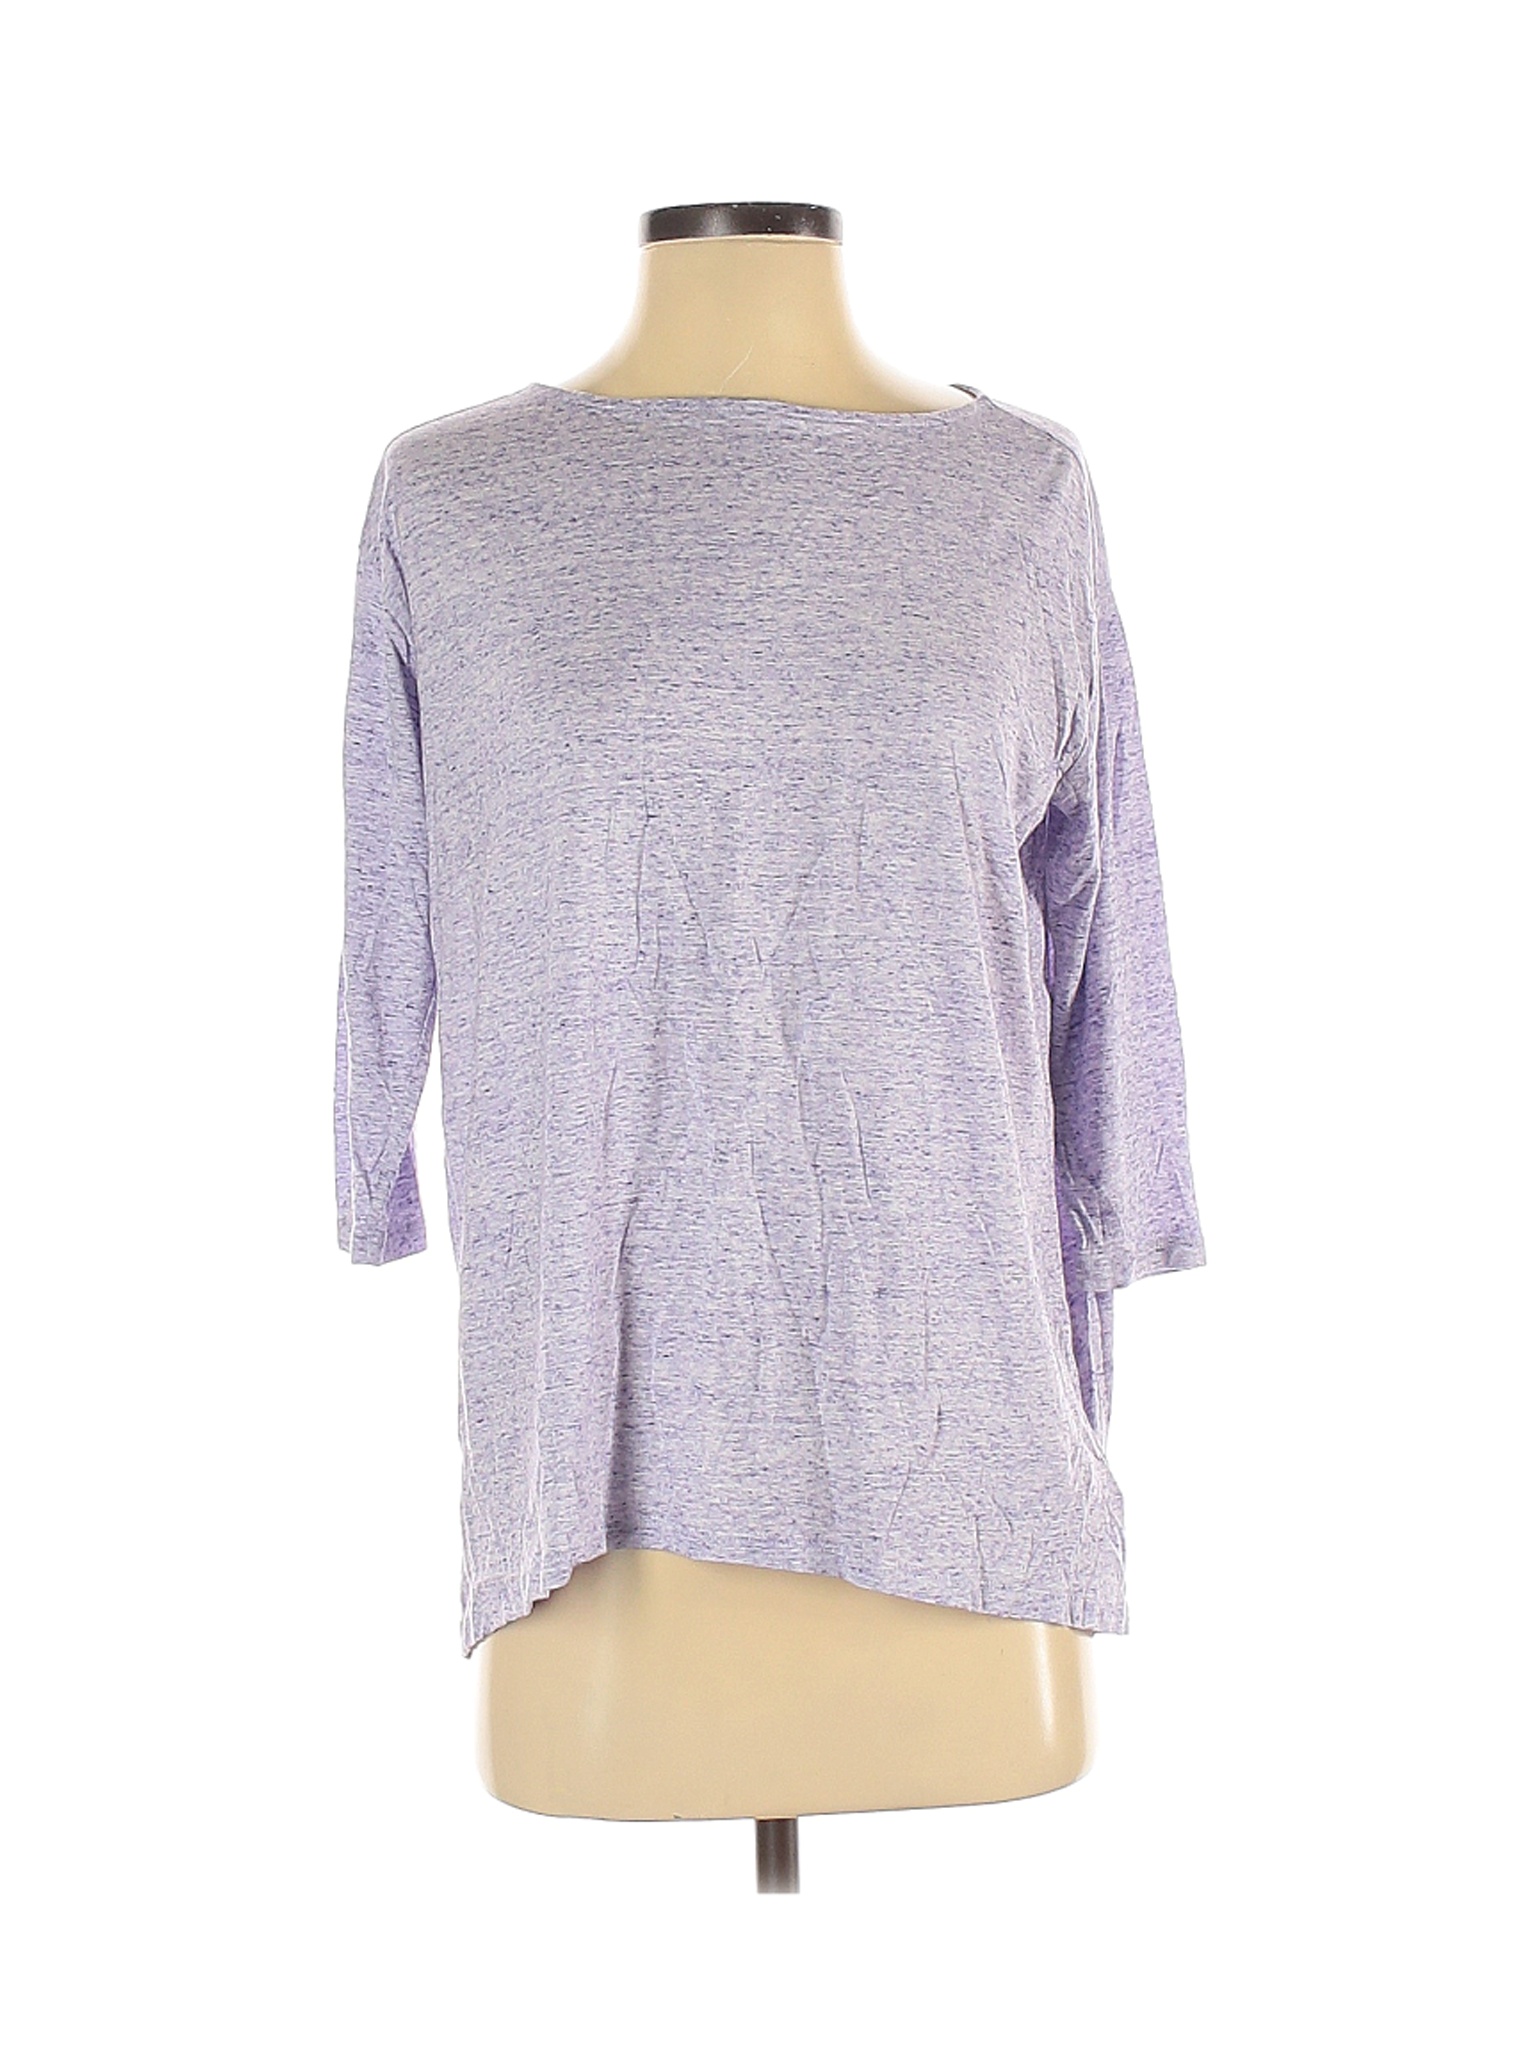 Gap Women Purple 3/4 Sleeve T-Shirt S | eBay